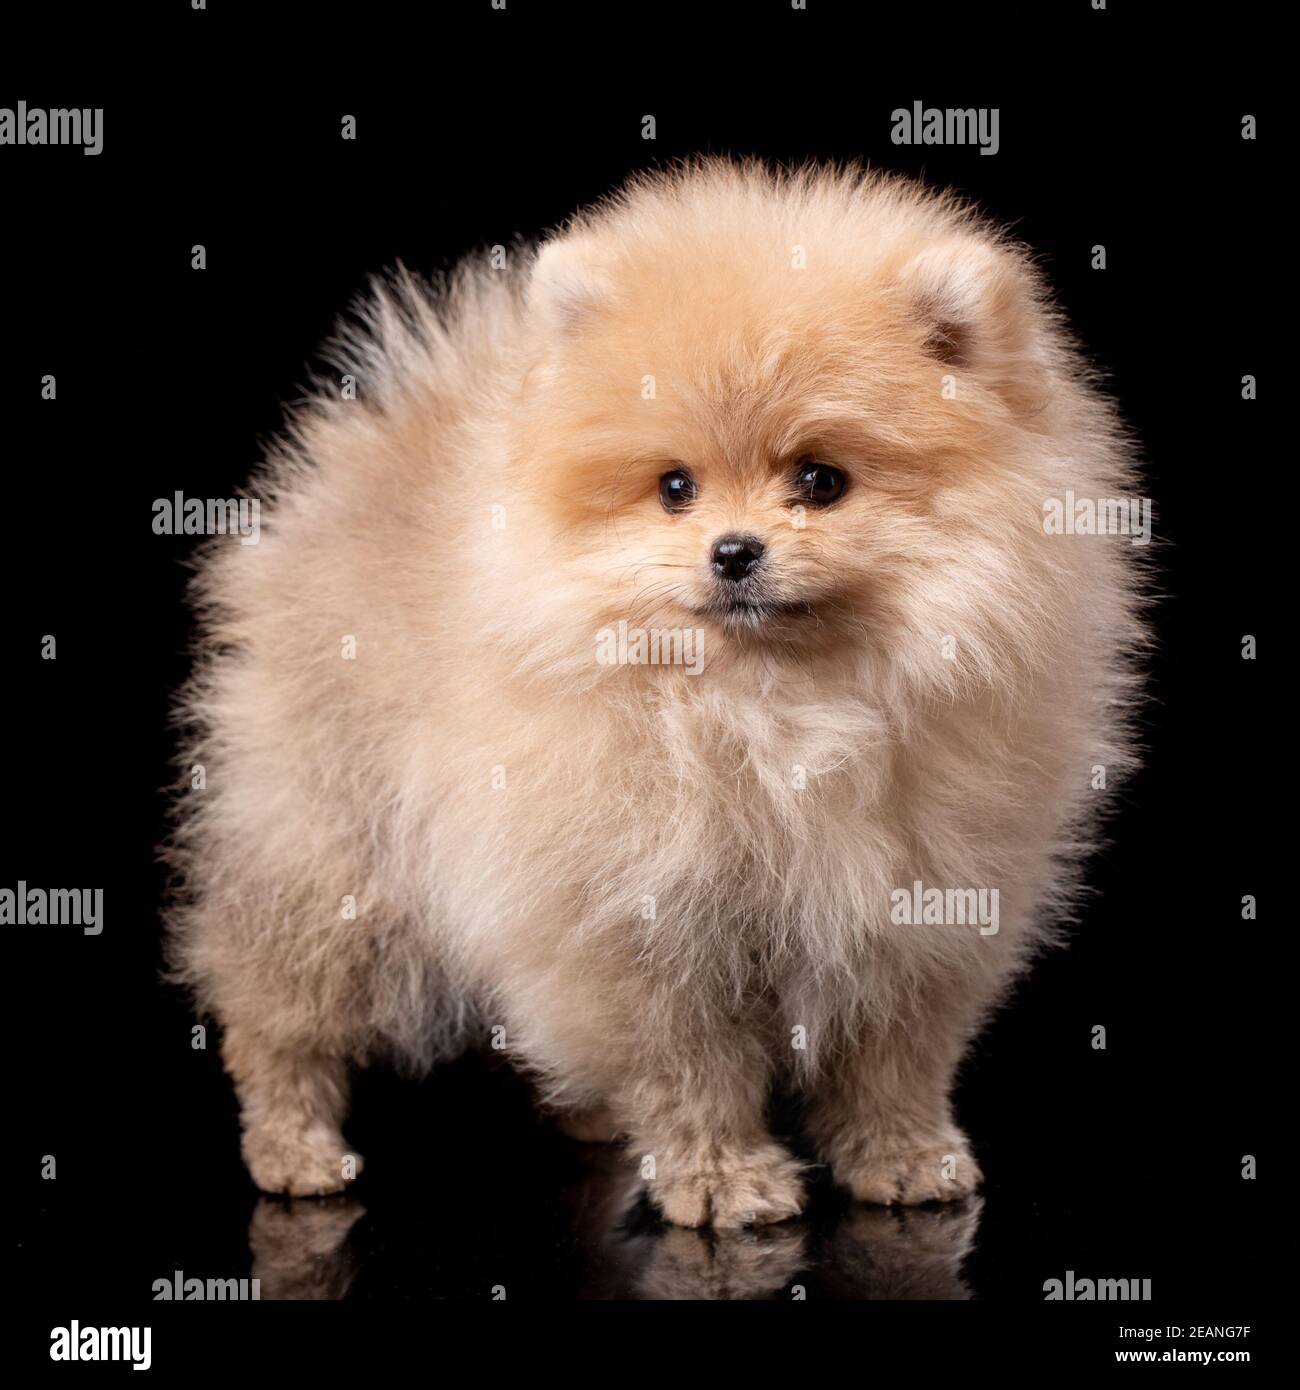 Miniature Pomeranian Spitz puppy standing on black background. Stock Photo